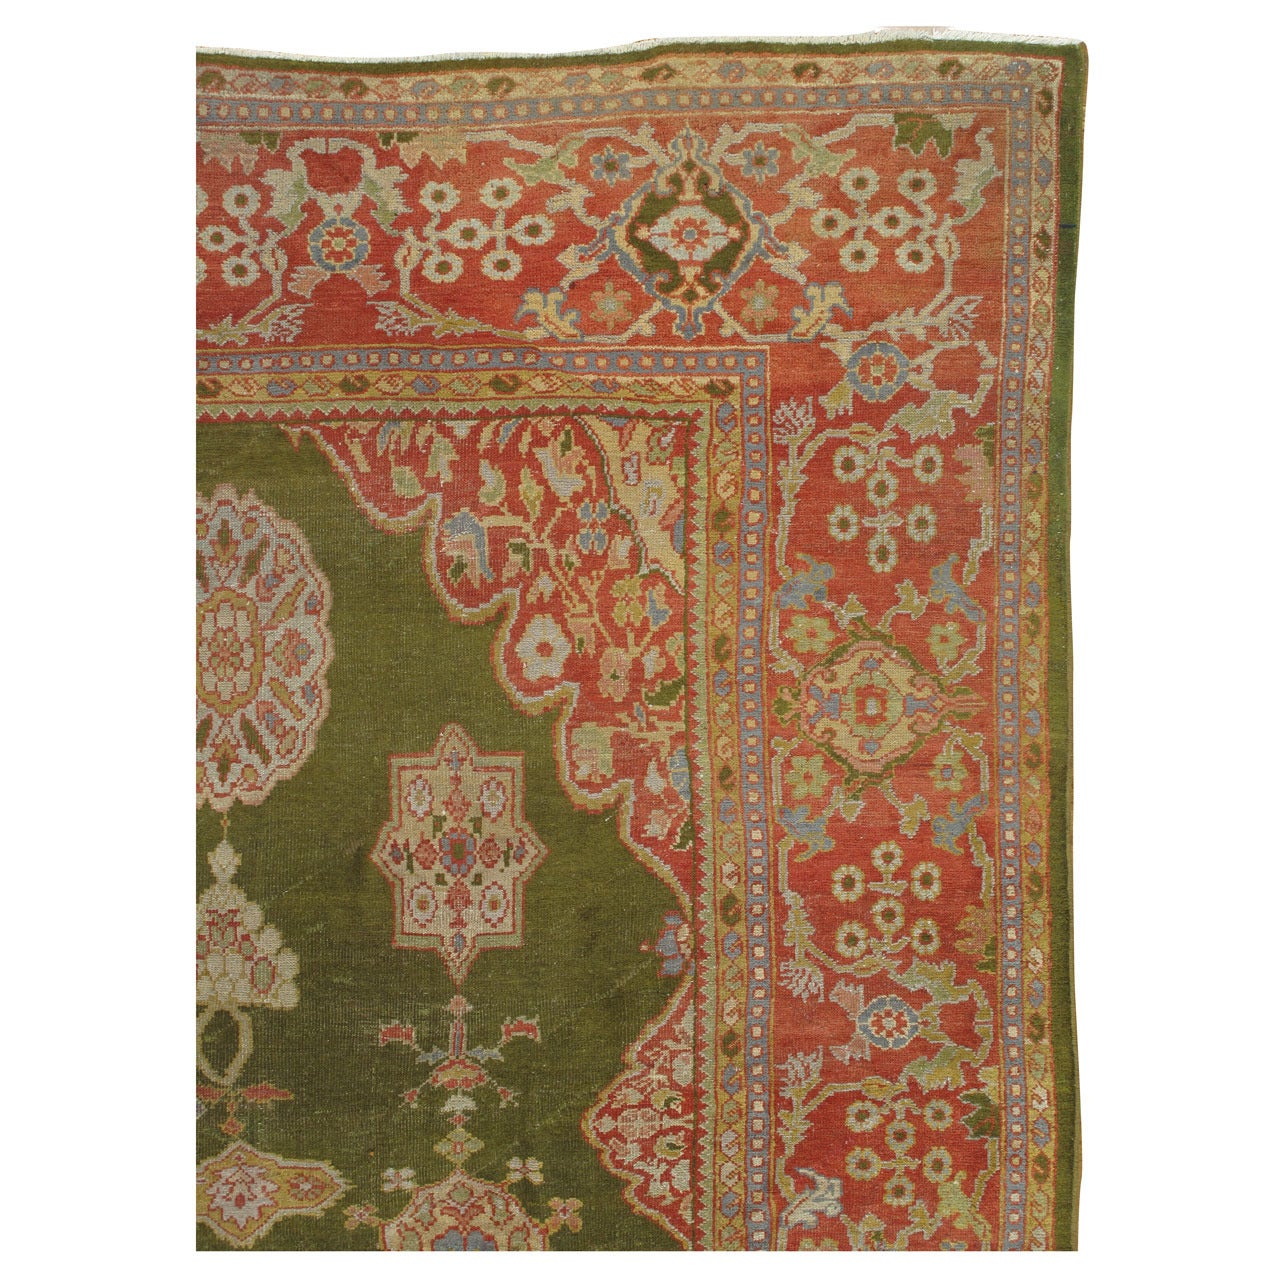 Tapis persan ancien Sultanabad vert, rouge corail, bleu clair, or et ivoire